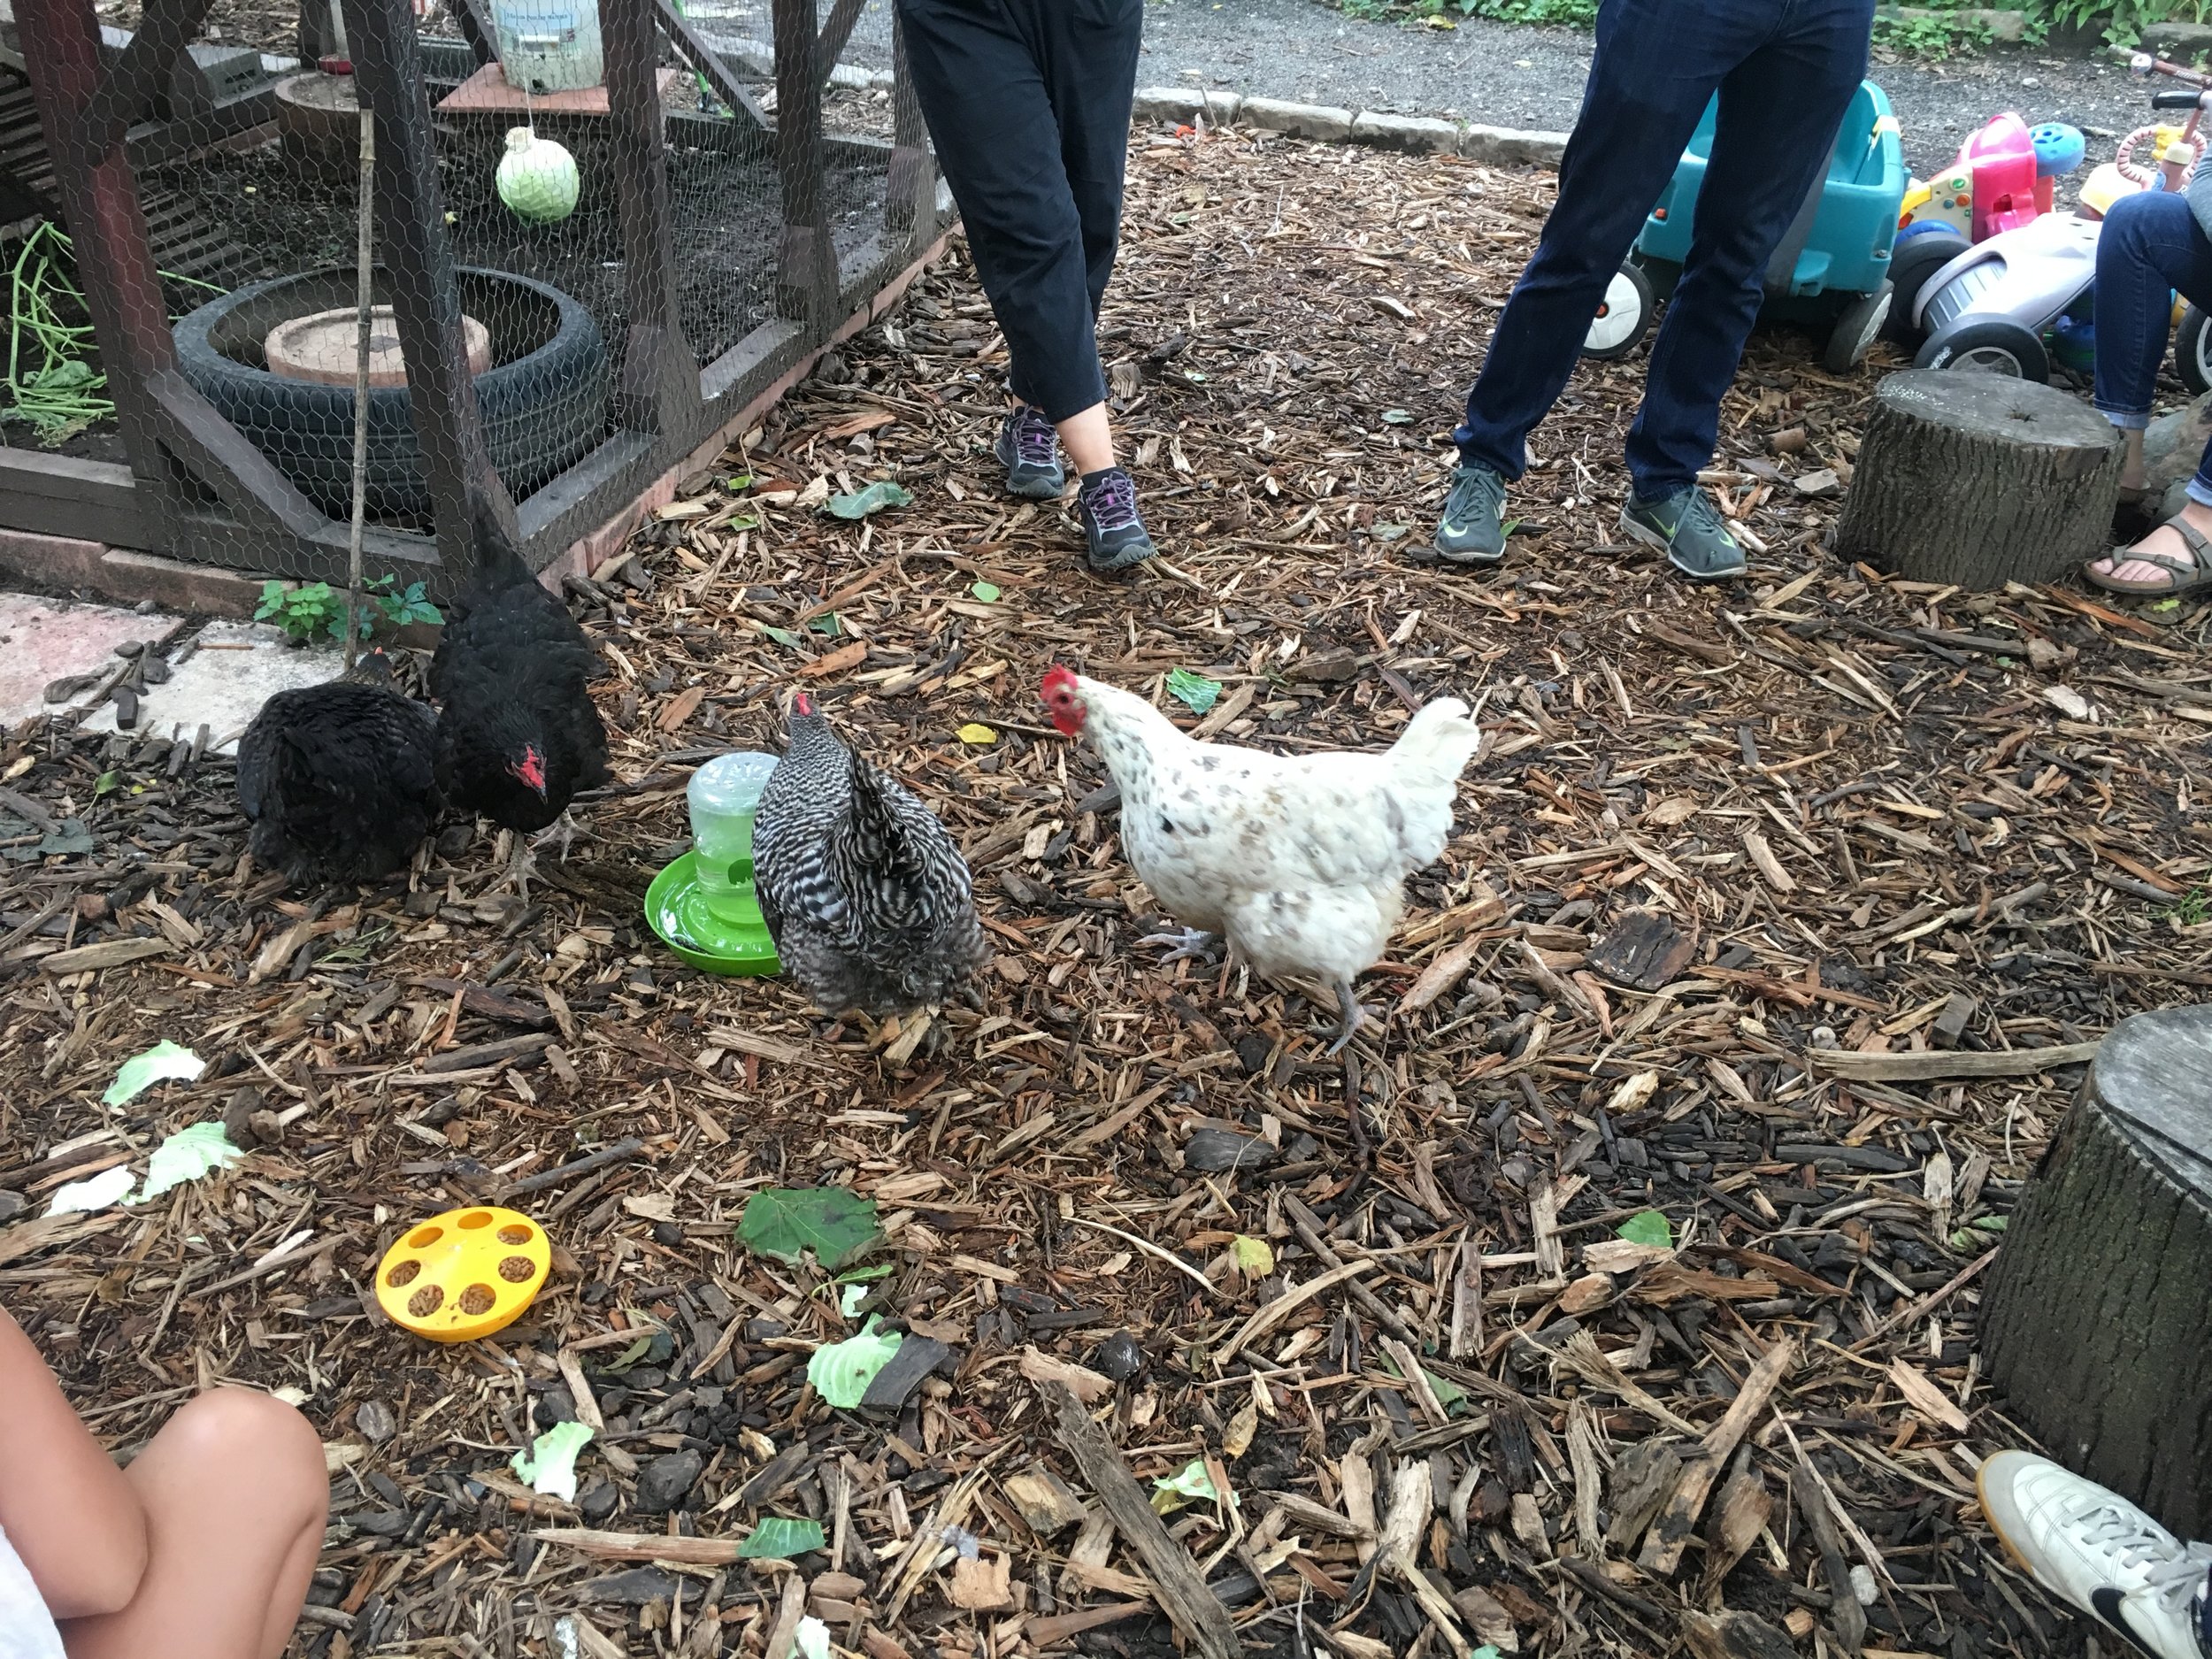 New chicken additions